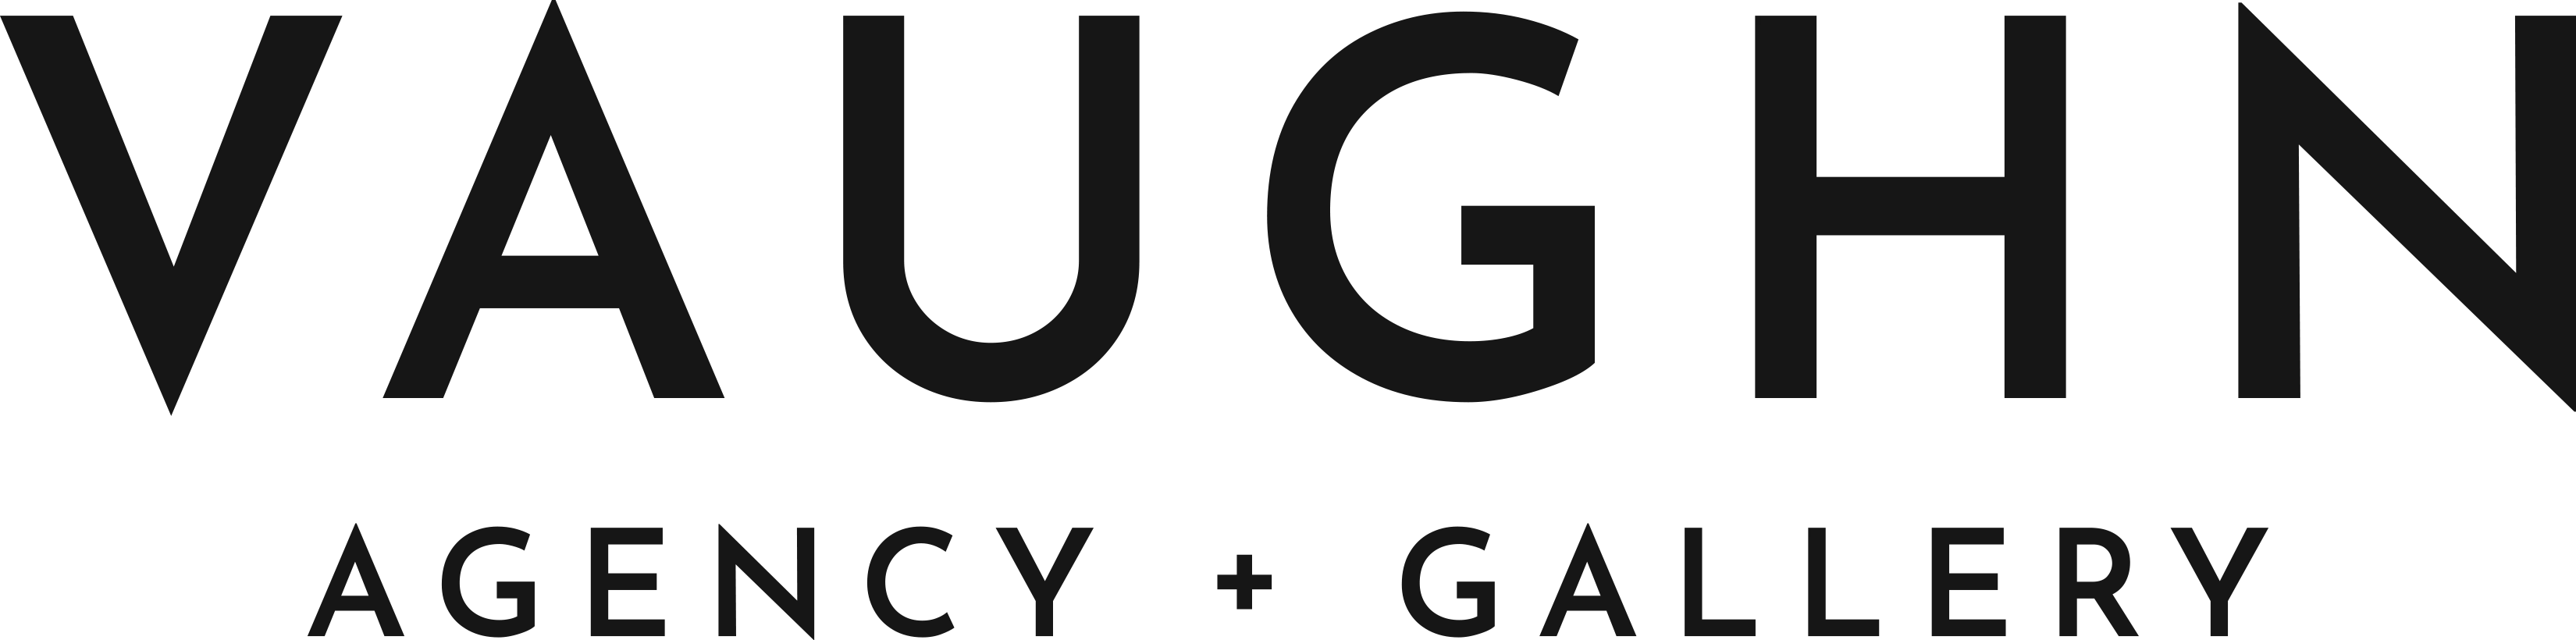 Vaughn Agency and Gallery logo